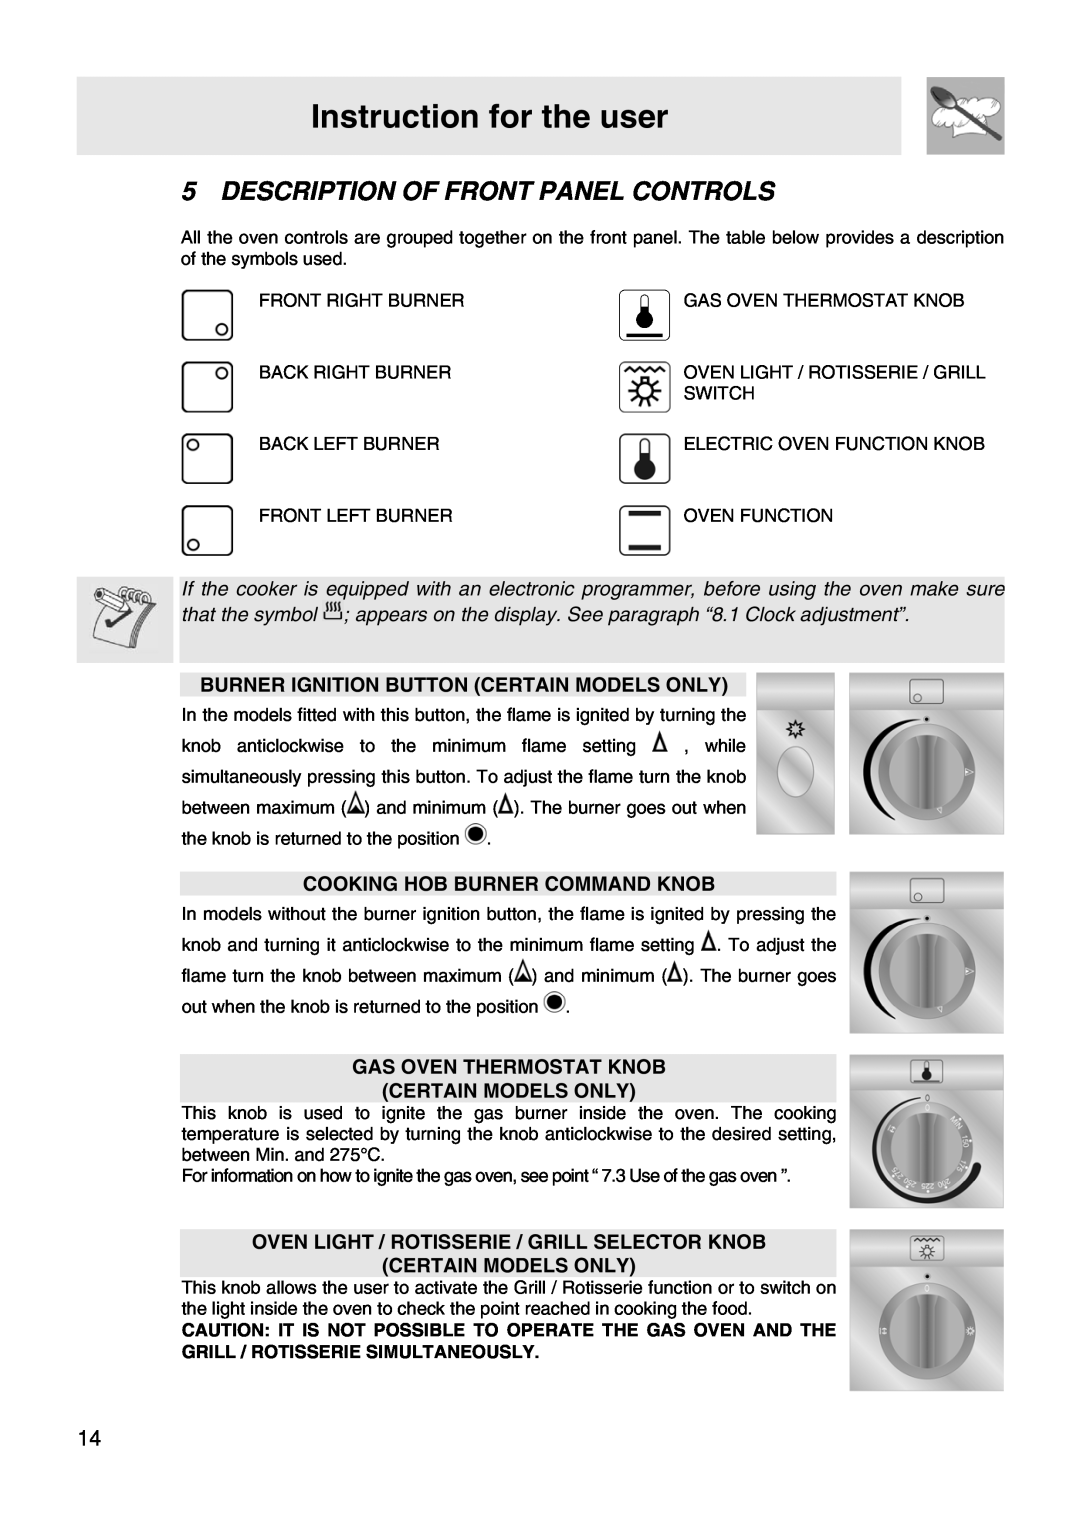 Smeg VA91XVG Instruction for the user, Description Of Front Panel Controls, Burner Ignition Button Certain Models Only 